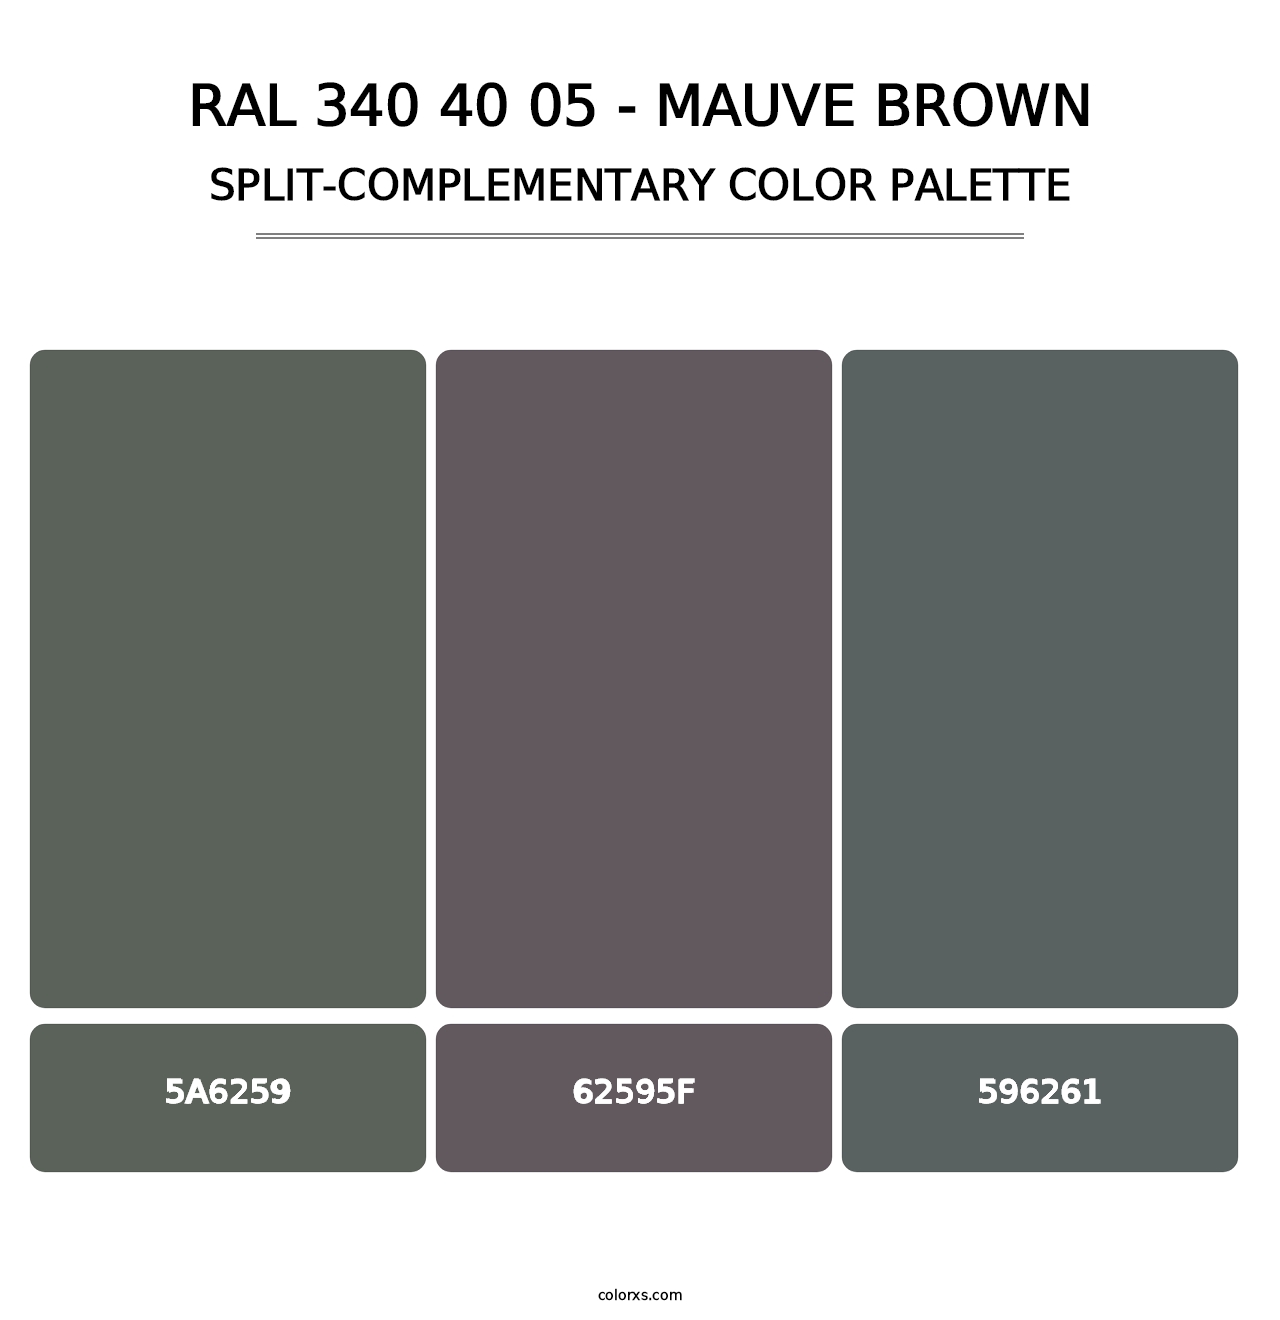 RAL 340 40 05 - Mauve Brown - Split-Complementary Color Palette